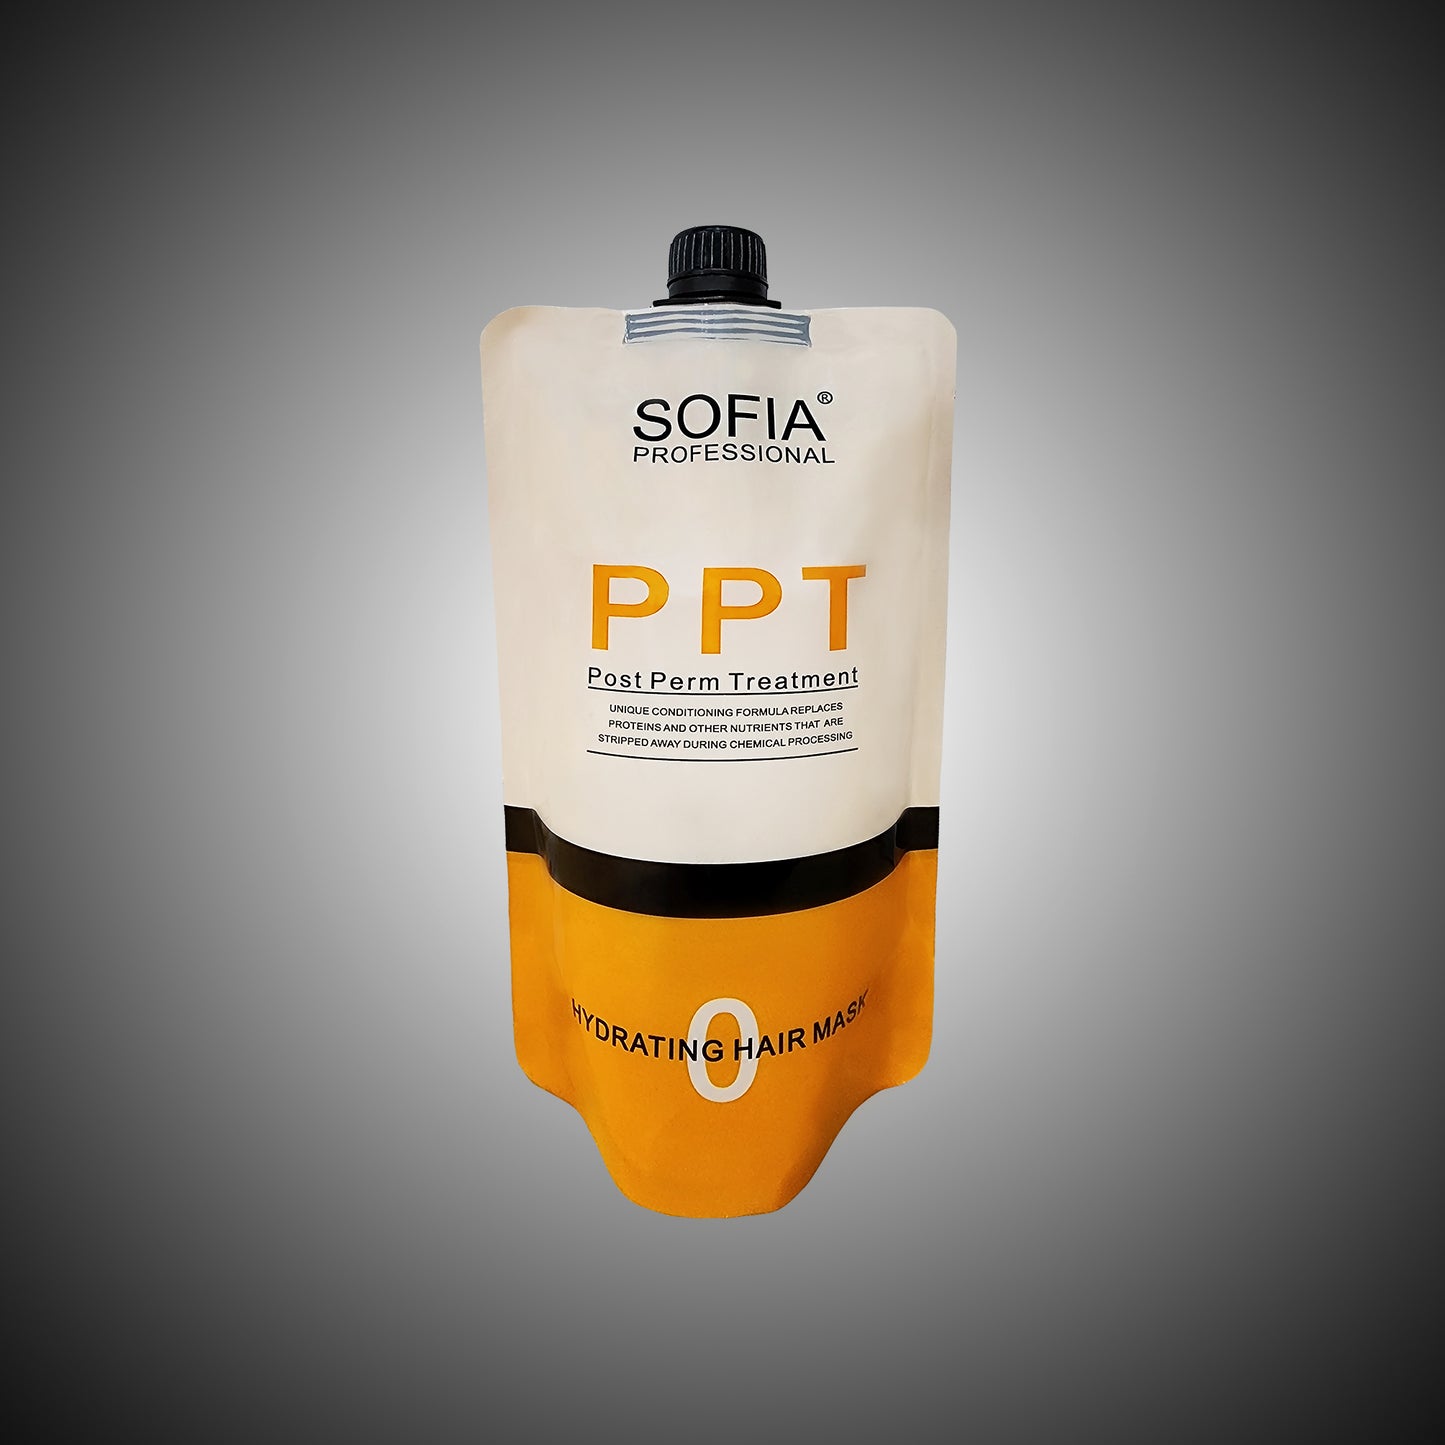 SOFIA EMP PPT Xeremie Excellent Liner Post Perm Treatment 100ml / 500ml / 1000ml